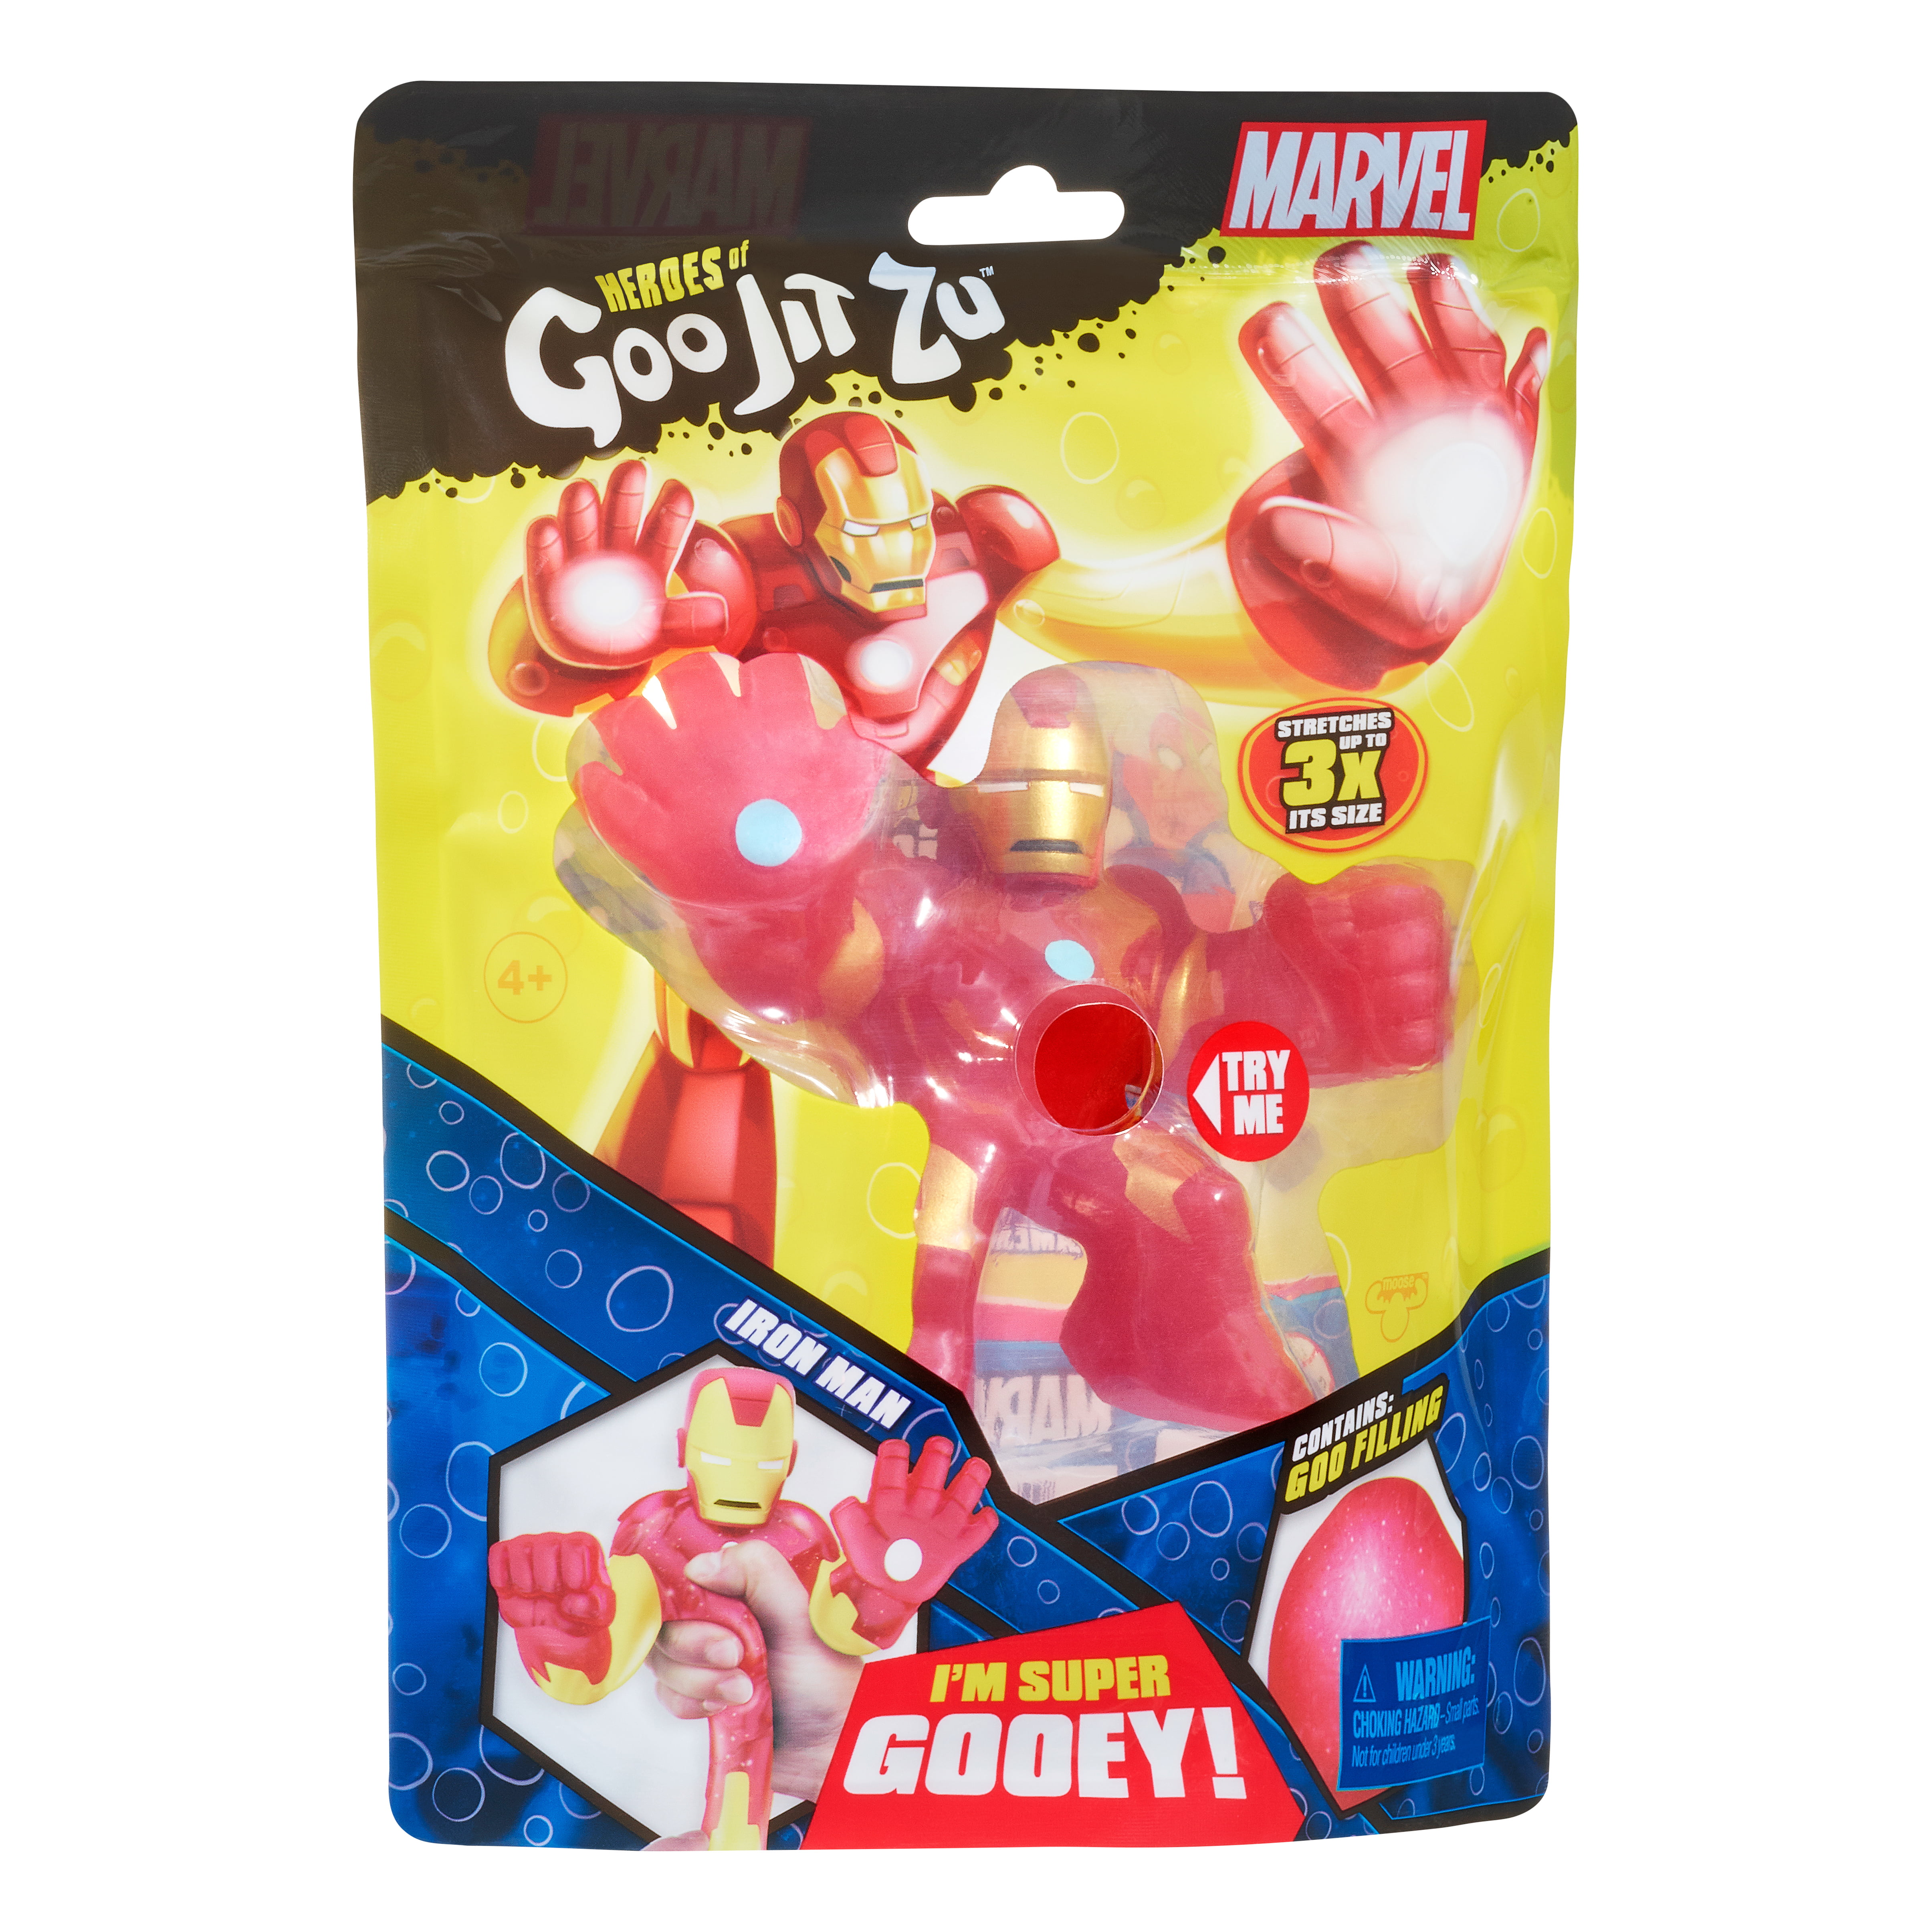 Marvel Iron Man Heroes of Goo JIT Zu Action Figure Super Gooey 2020 for sale online 